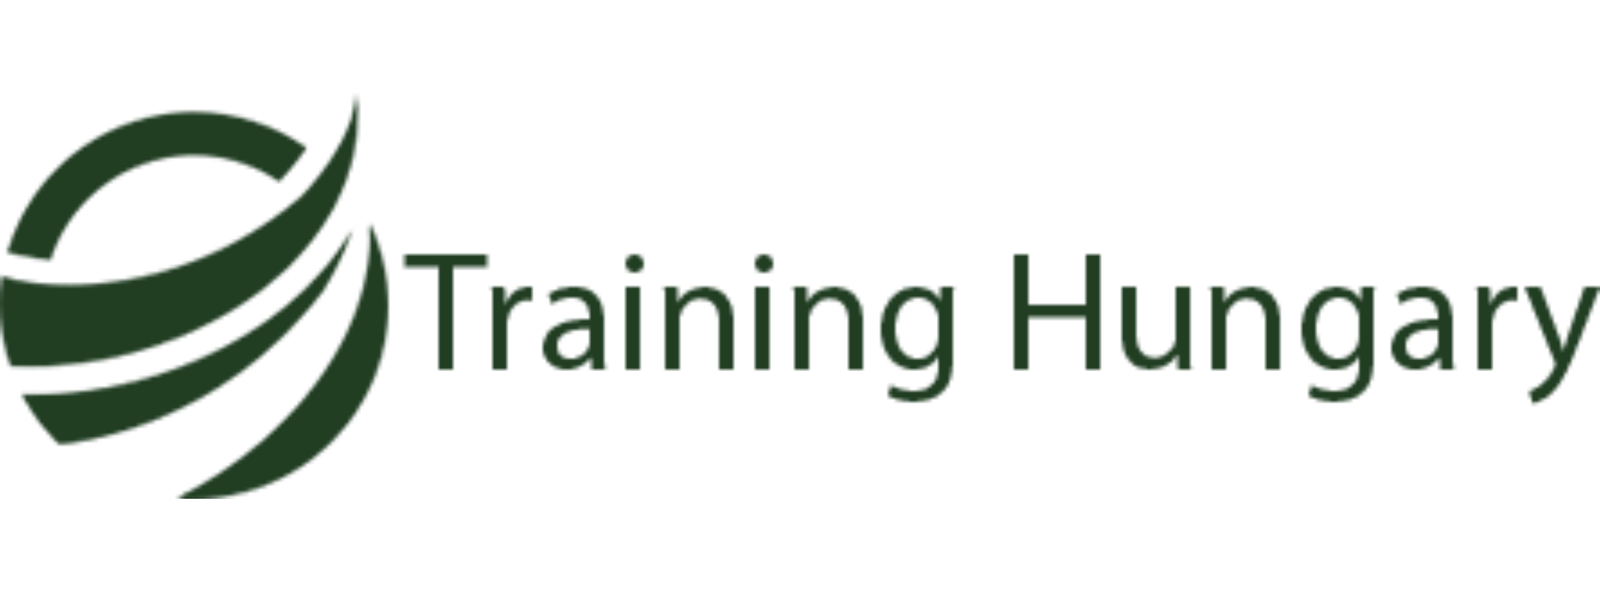 Training Hungary Logo